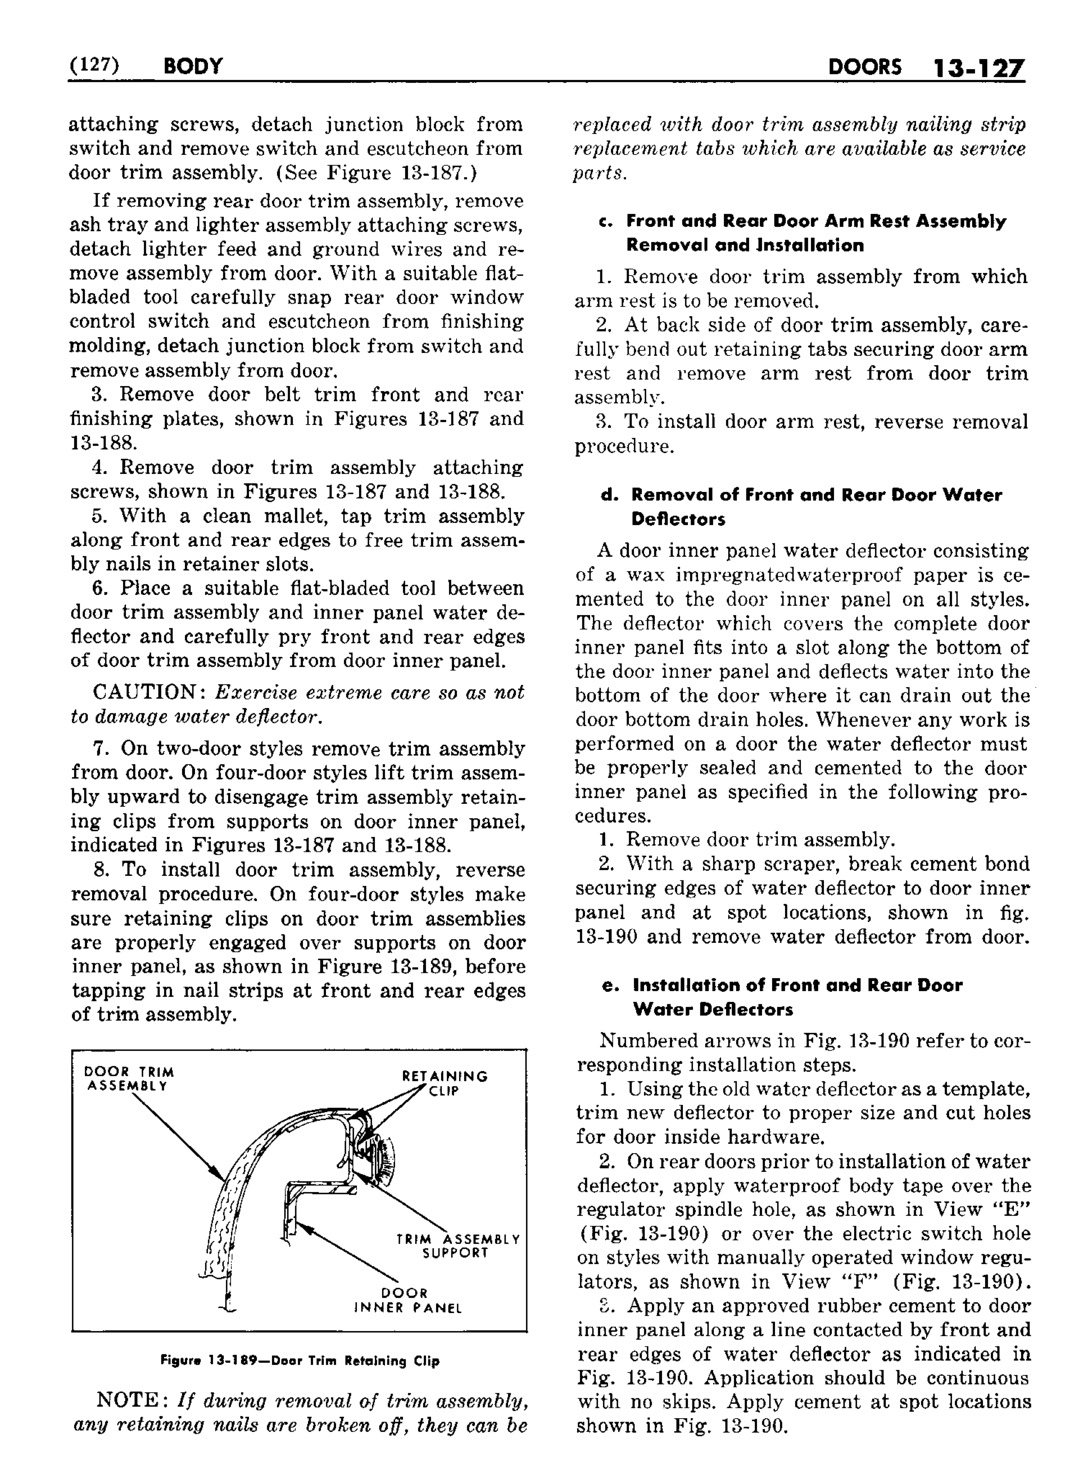 n_1958 Buick Body Service Manual-128-128.jpg